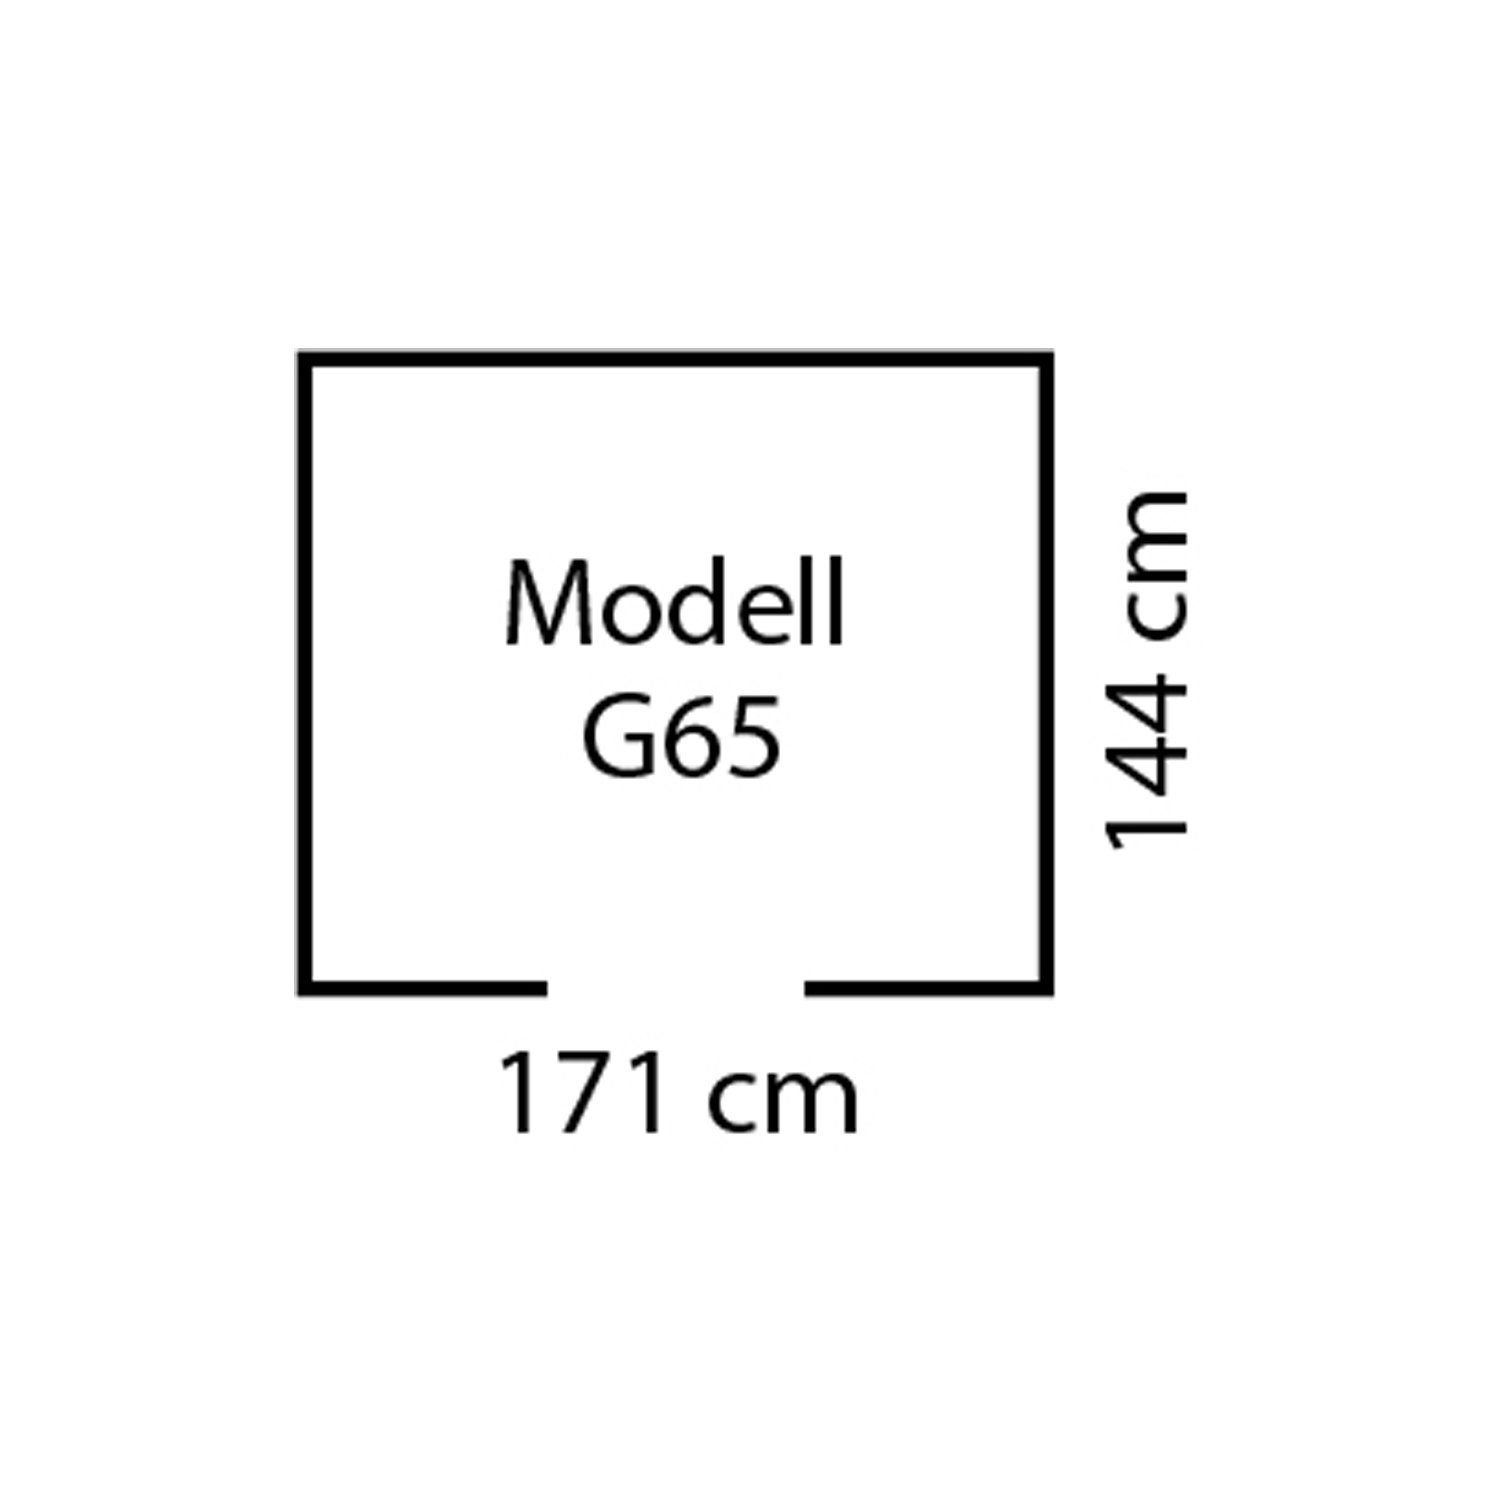 Globel Industries Gerätehaus (2,83 65" Metall-Gartenmanager jade m) "Dream